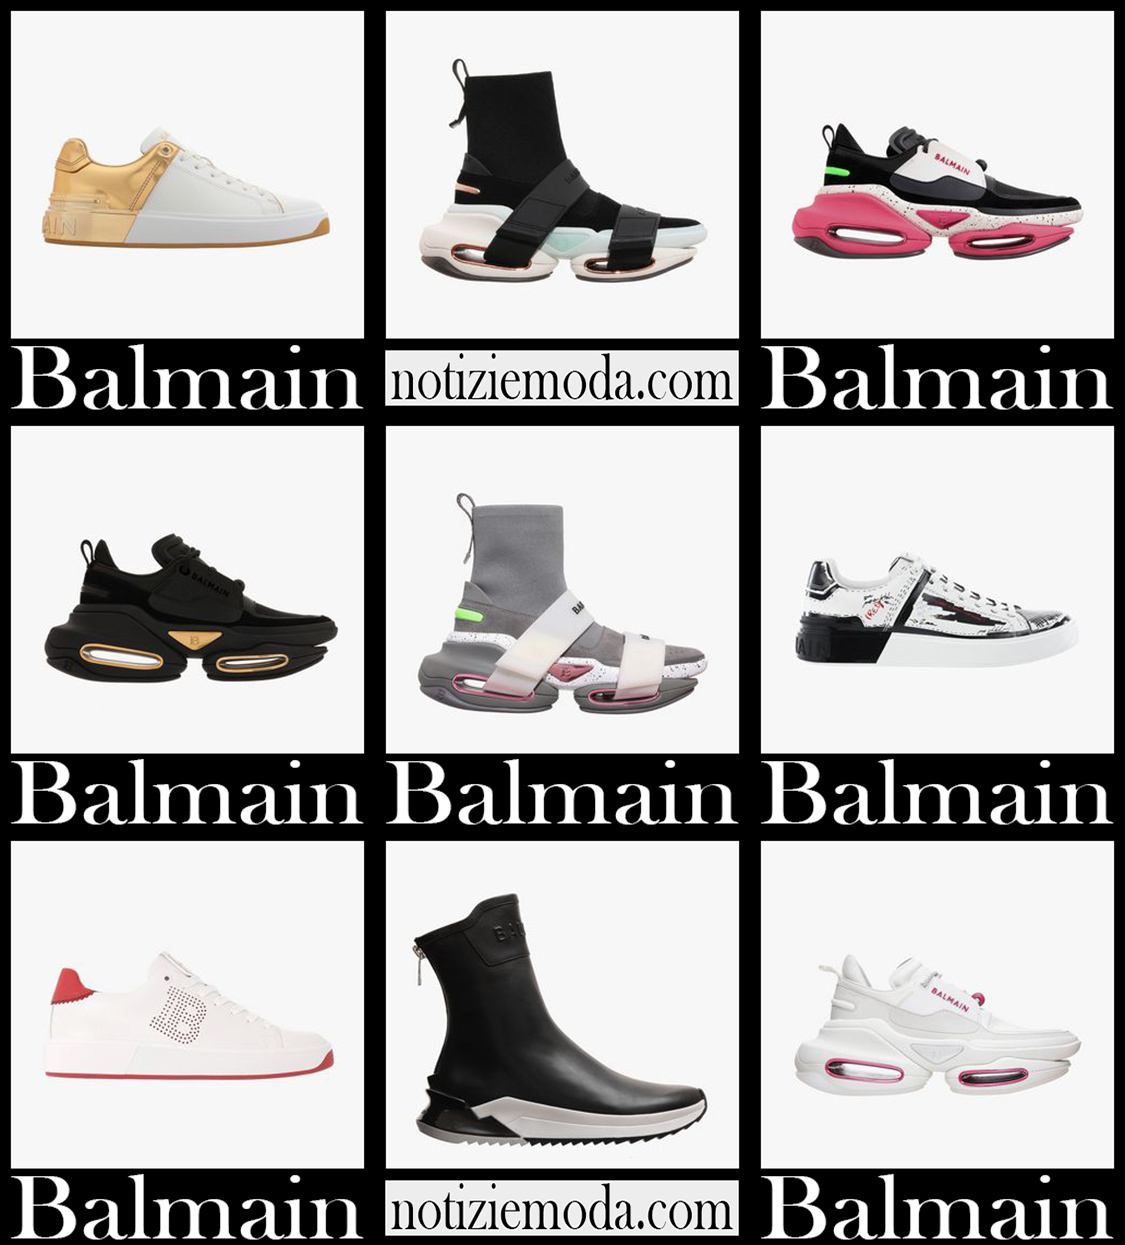 Nuovi arrivi sneakers Balmain 2021 calzature moda donna